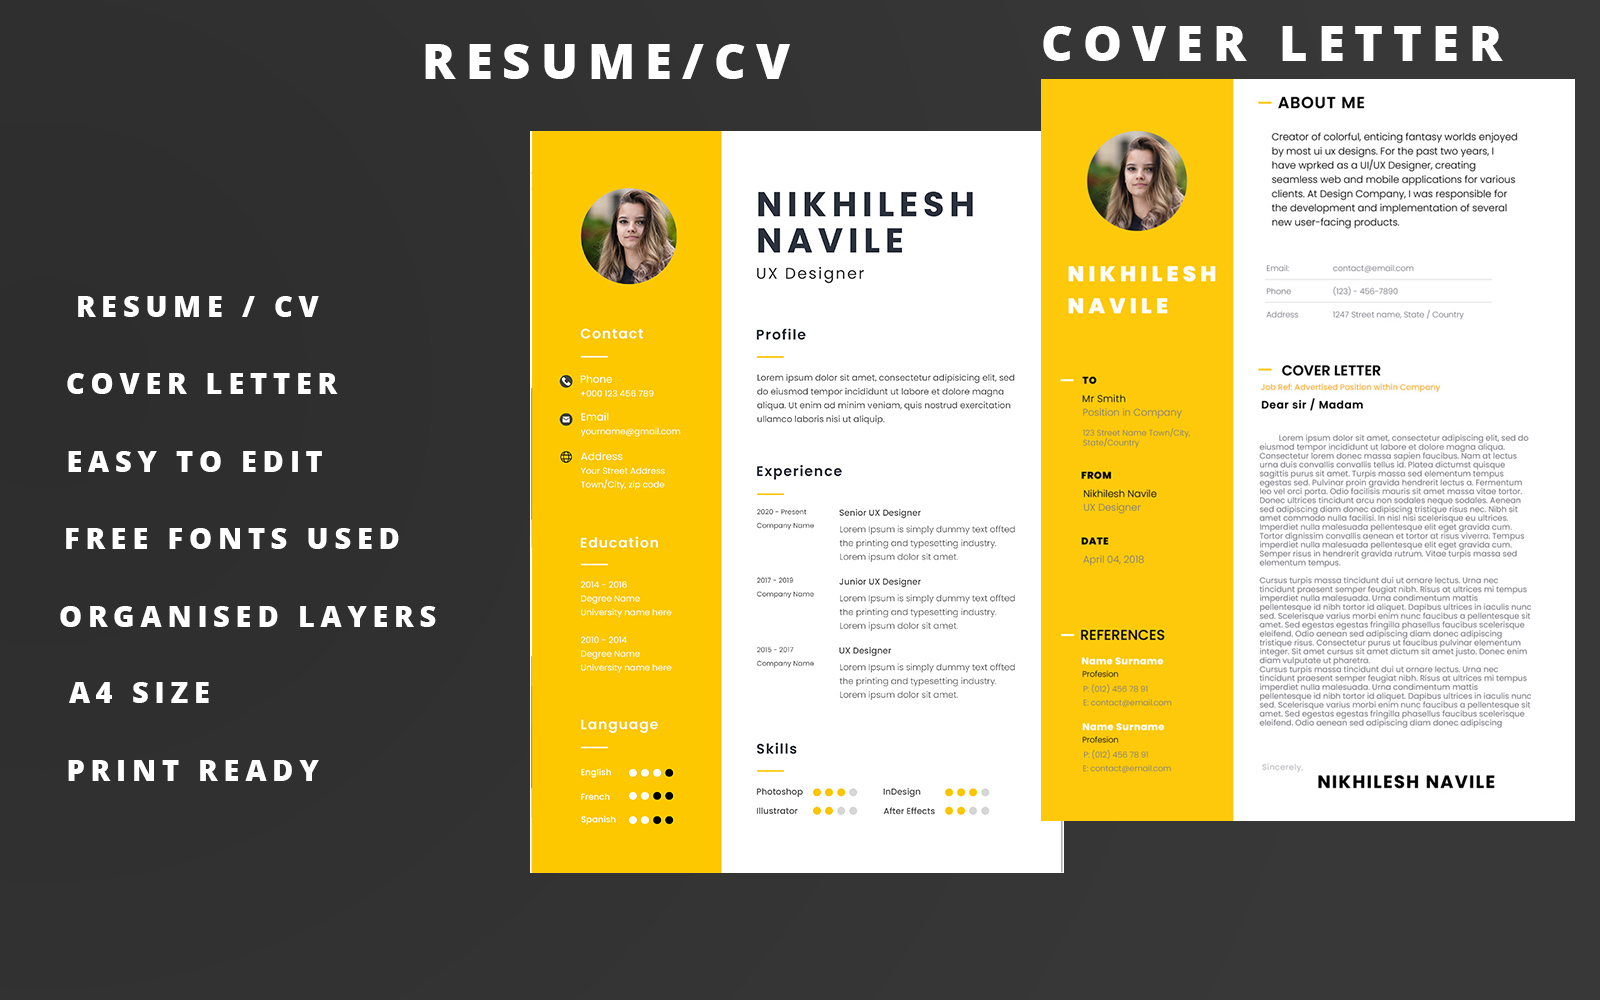 Nicky Navile - CV Resume Template